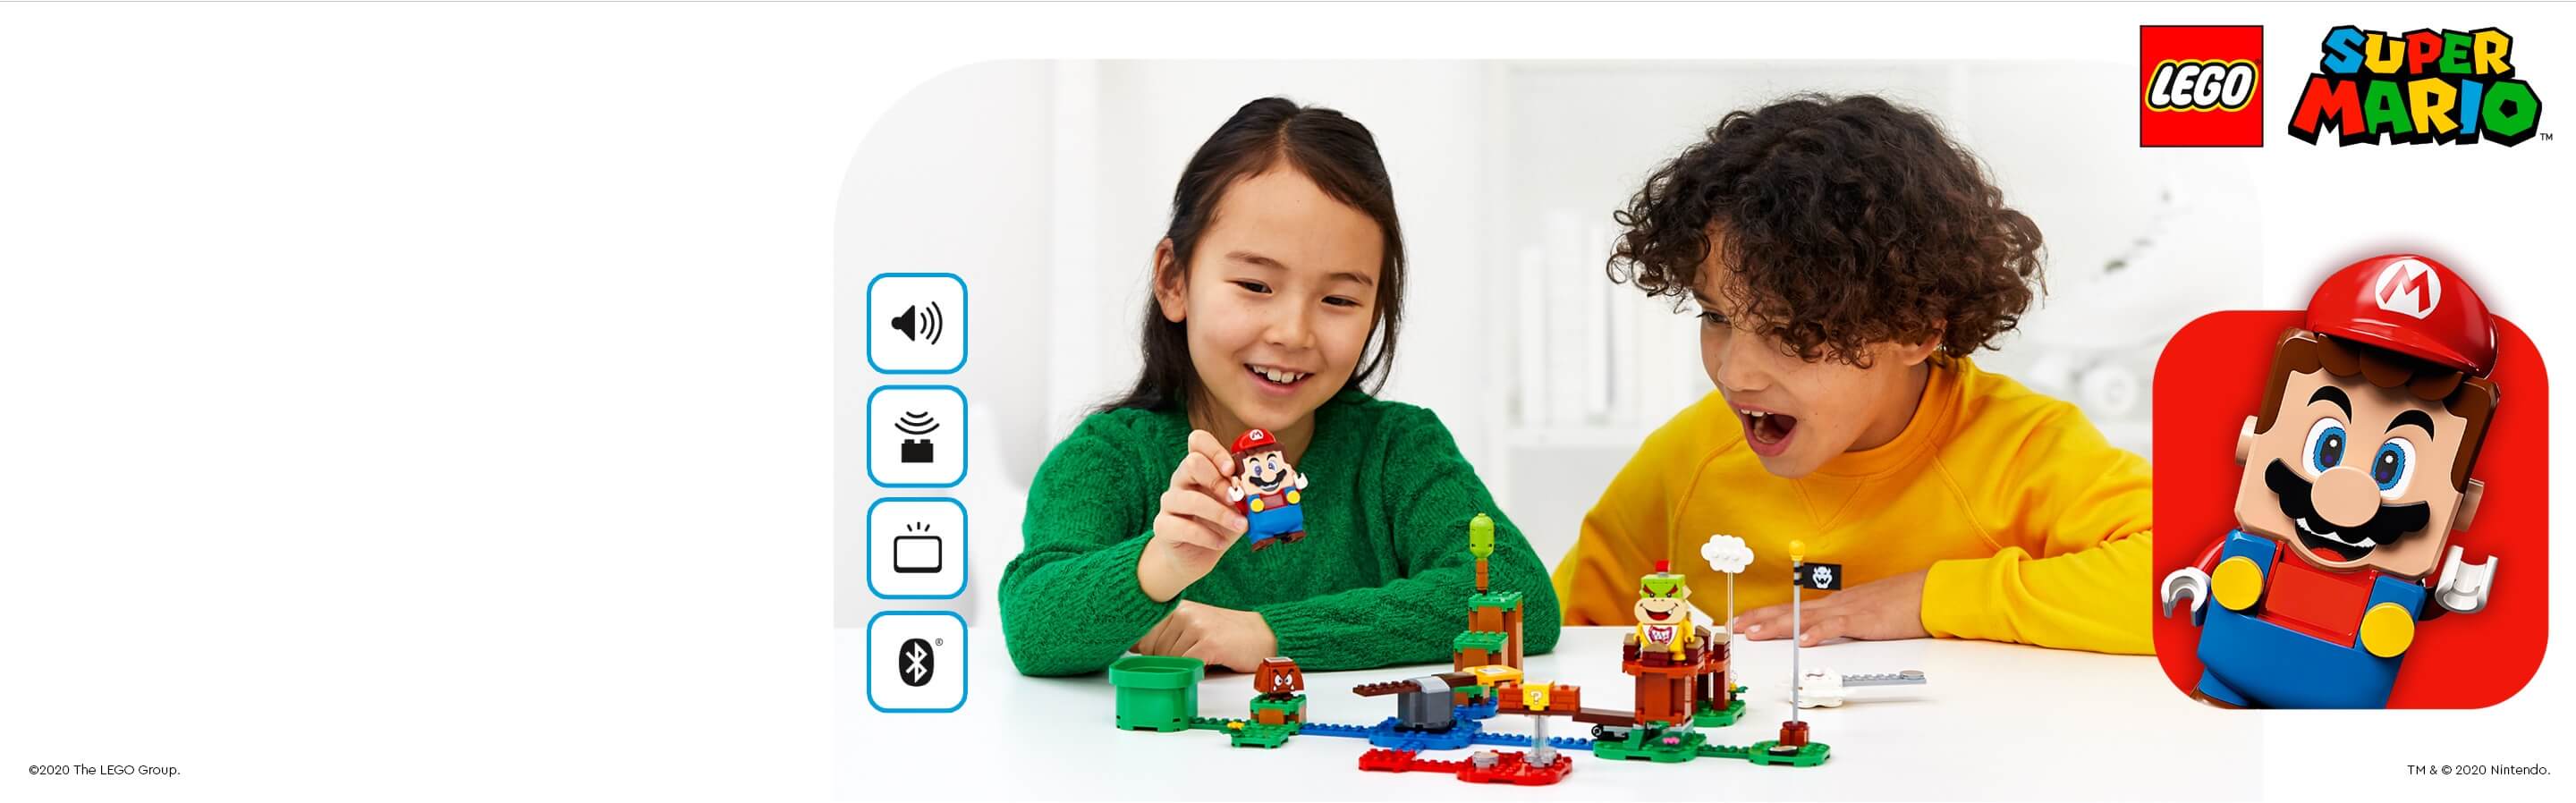 Lego Super Mario Guide Kmart - clothes shoes accessories kids roblox super mario